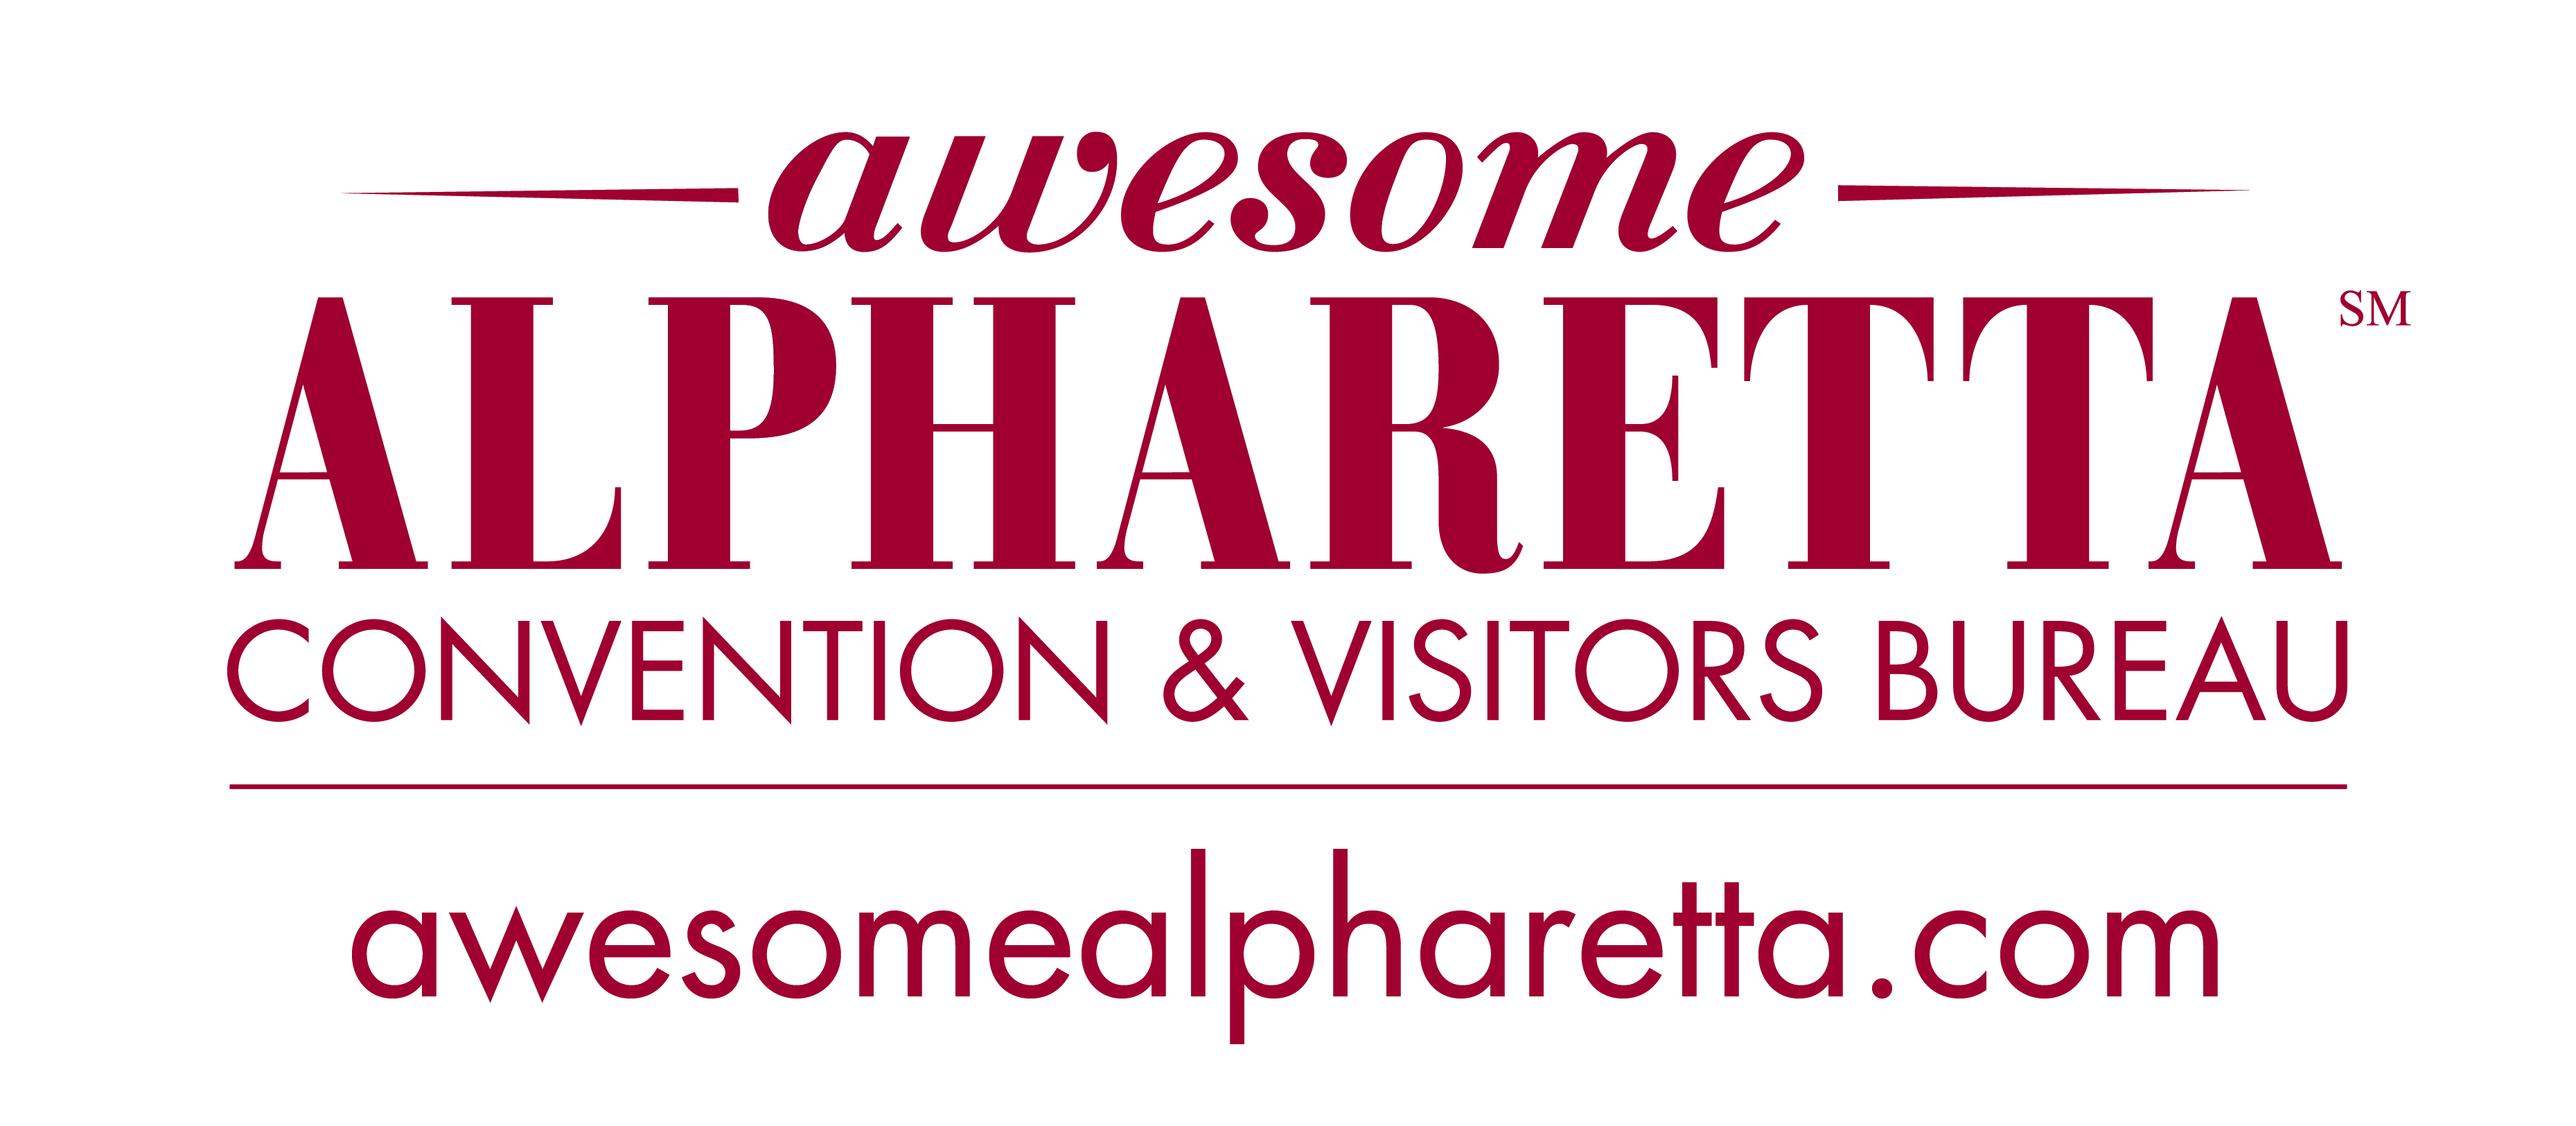 Awesome Alpharetta Convention and Visitors Bureau logo